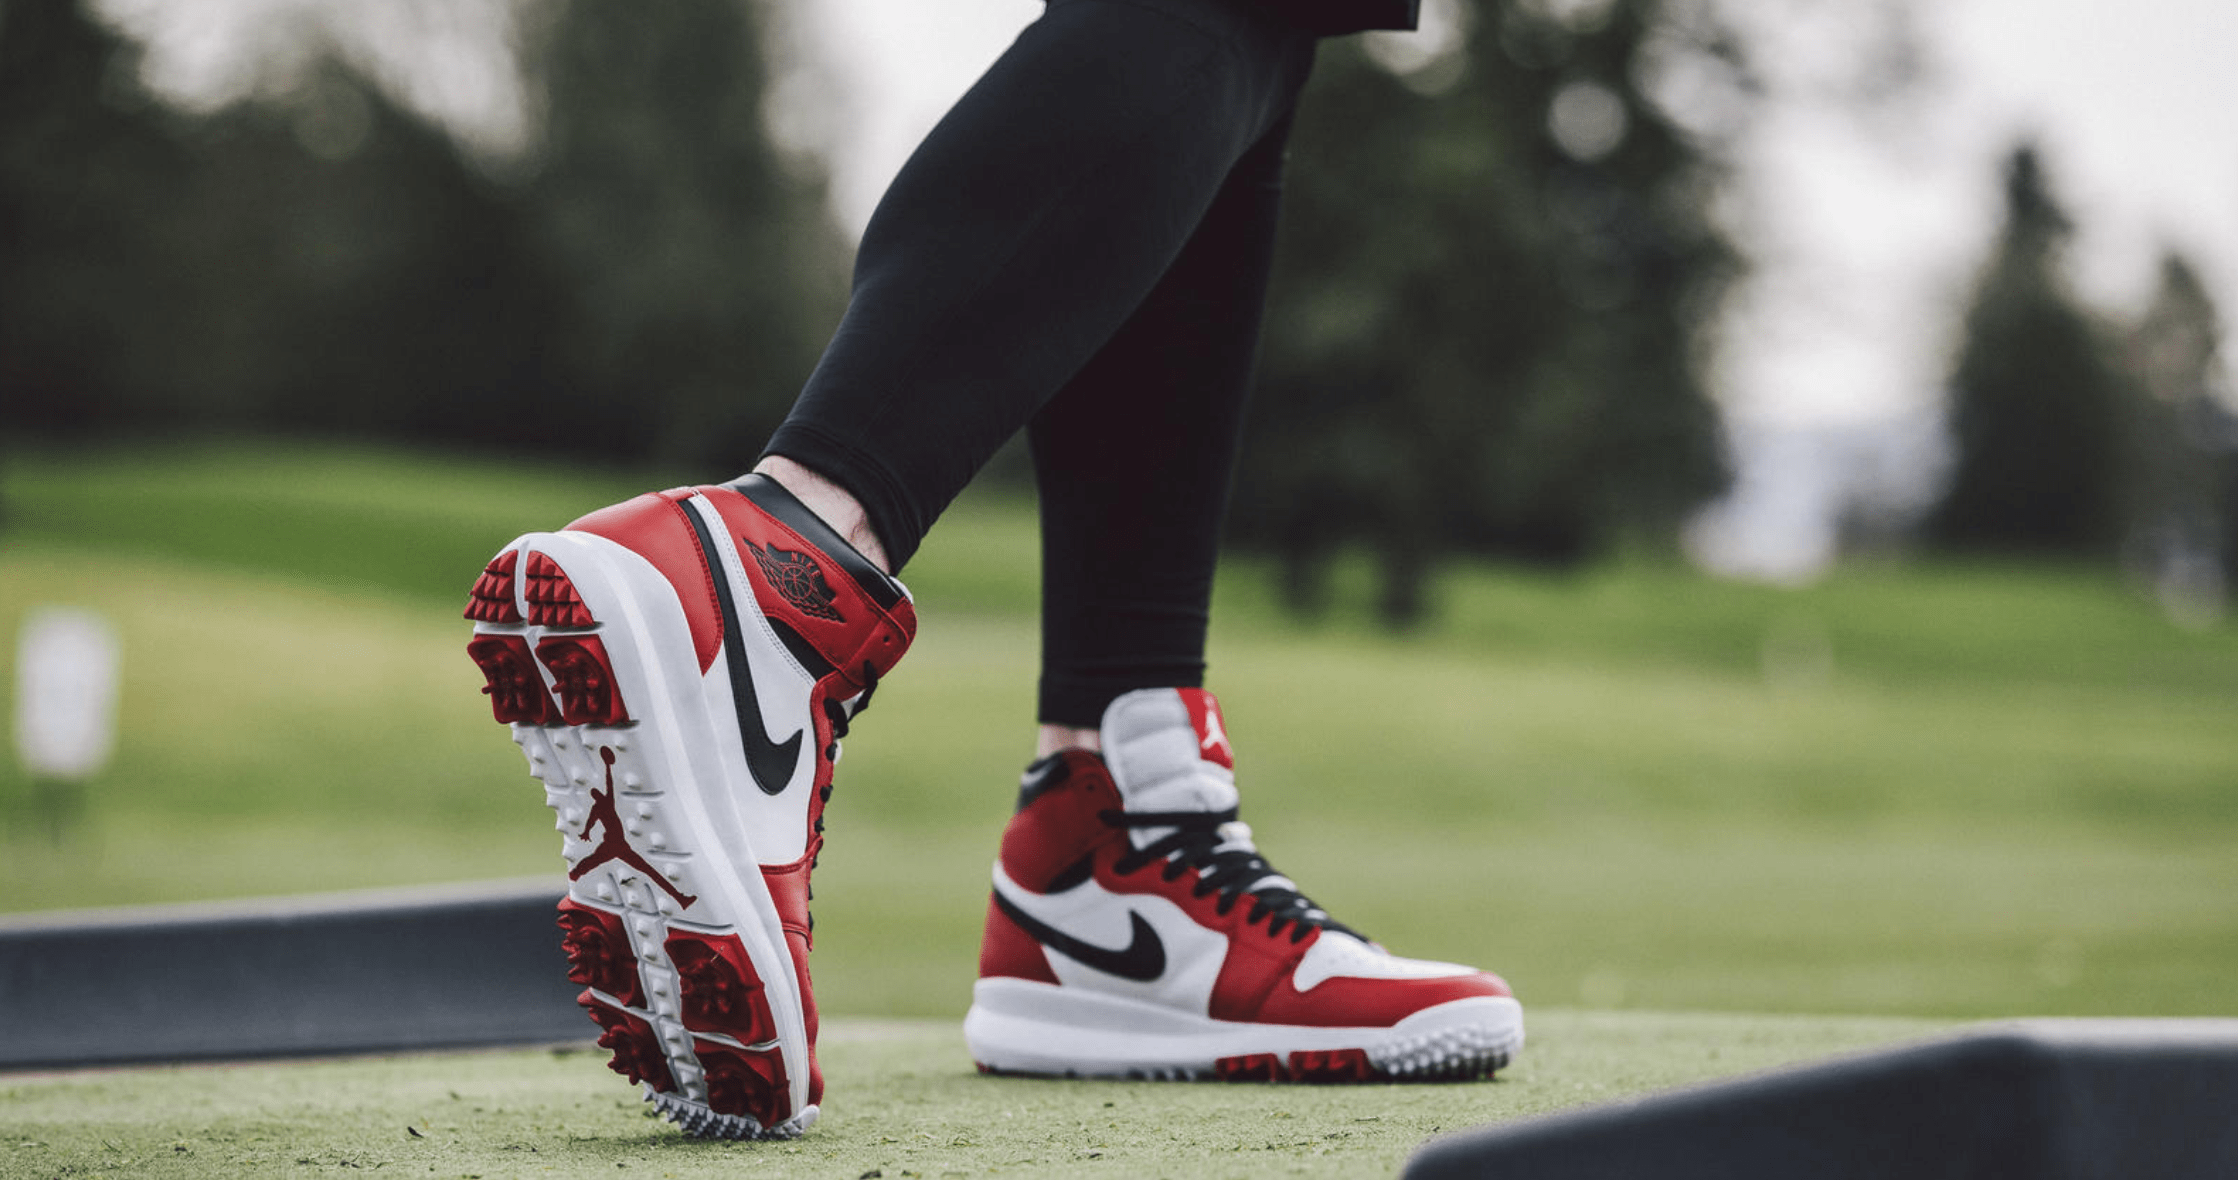 Nike Air Jordan I Golf Schuhe - Test, Bewertung und